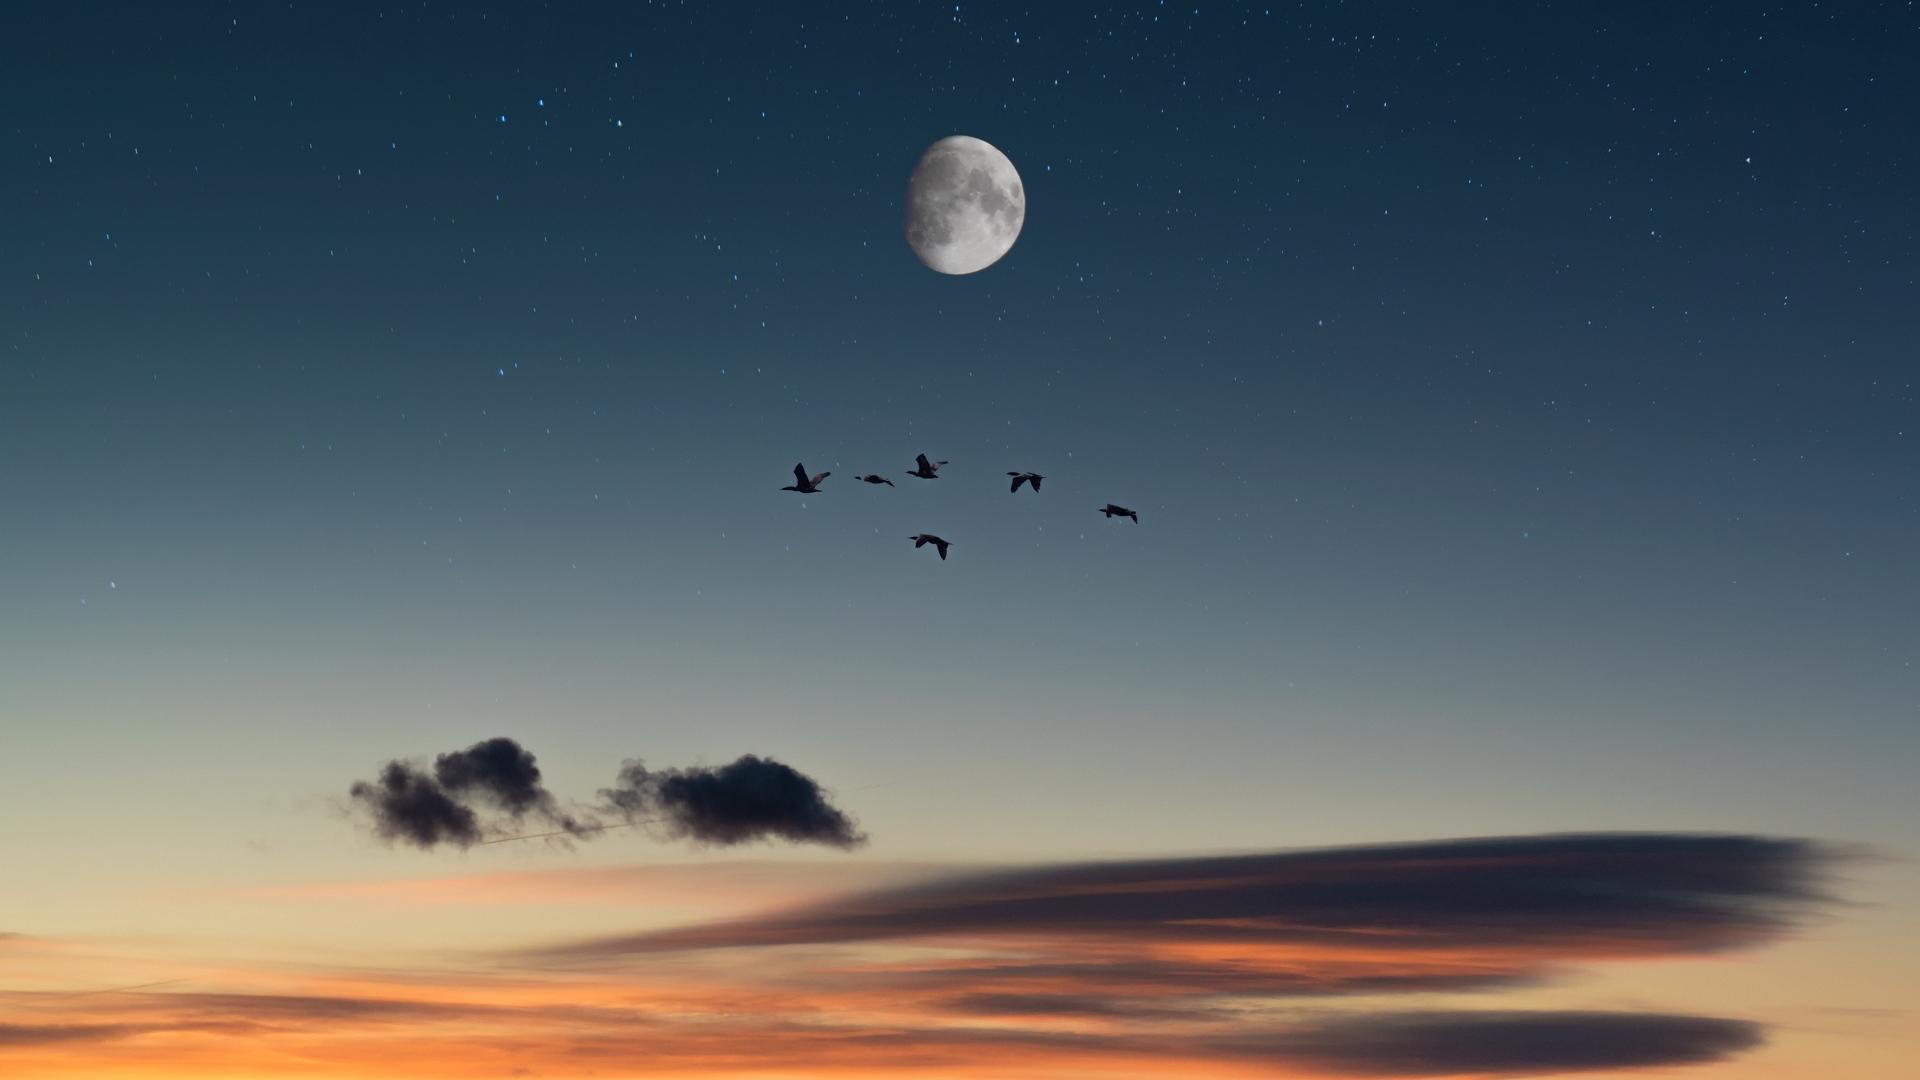 Download wallpaper 1920x1080 full moon, birds, desert, starry sky